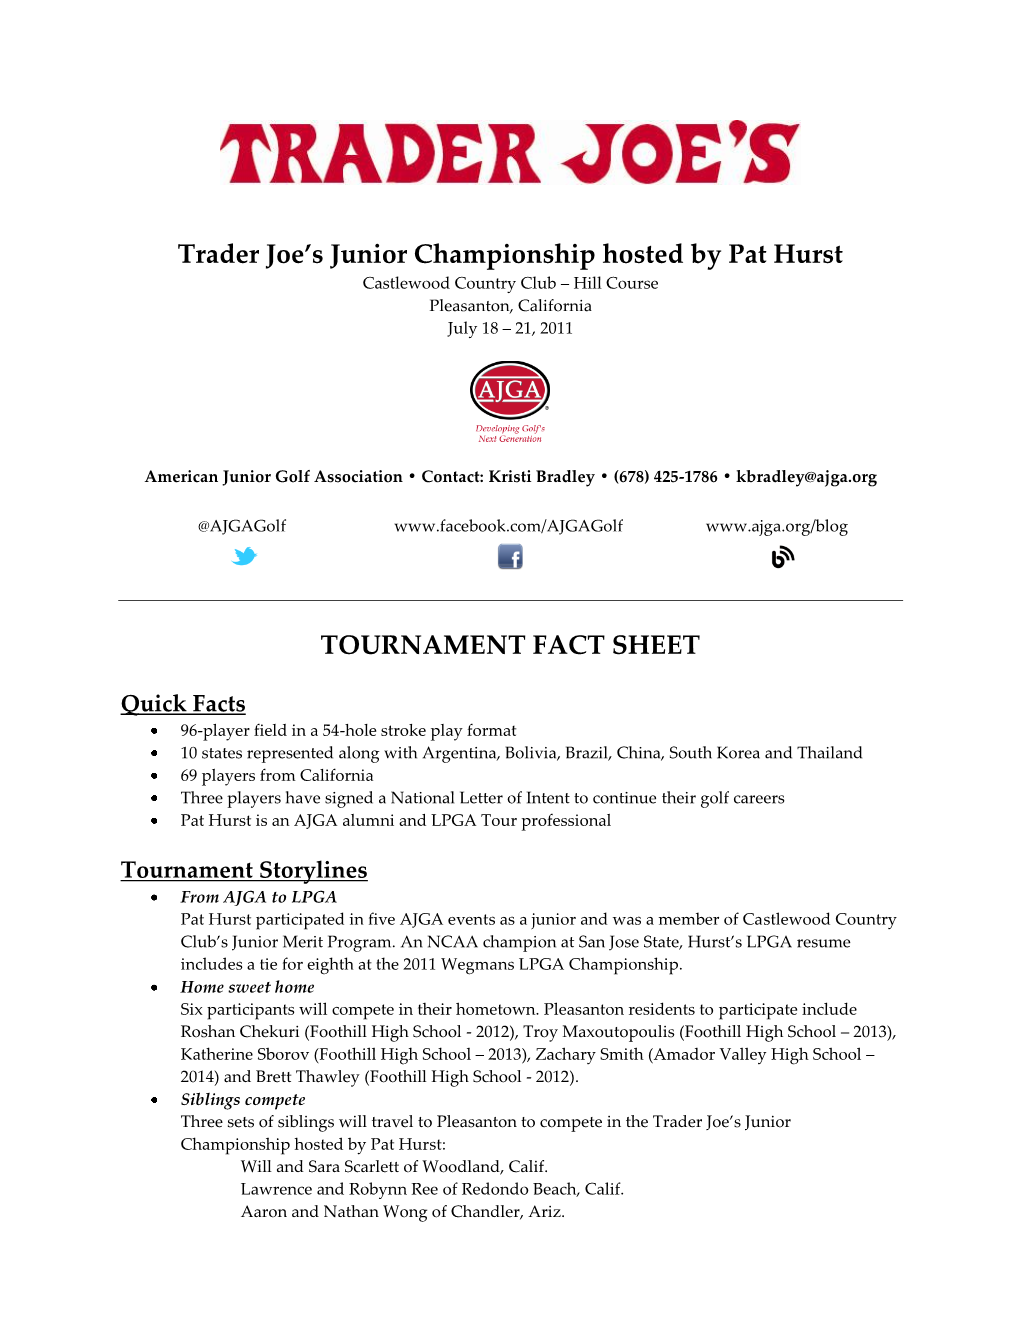 Trader Joe's Junior Championship Hosted by Pat Hurst TOURNAMENT